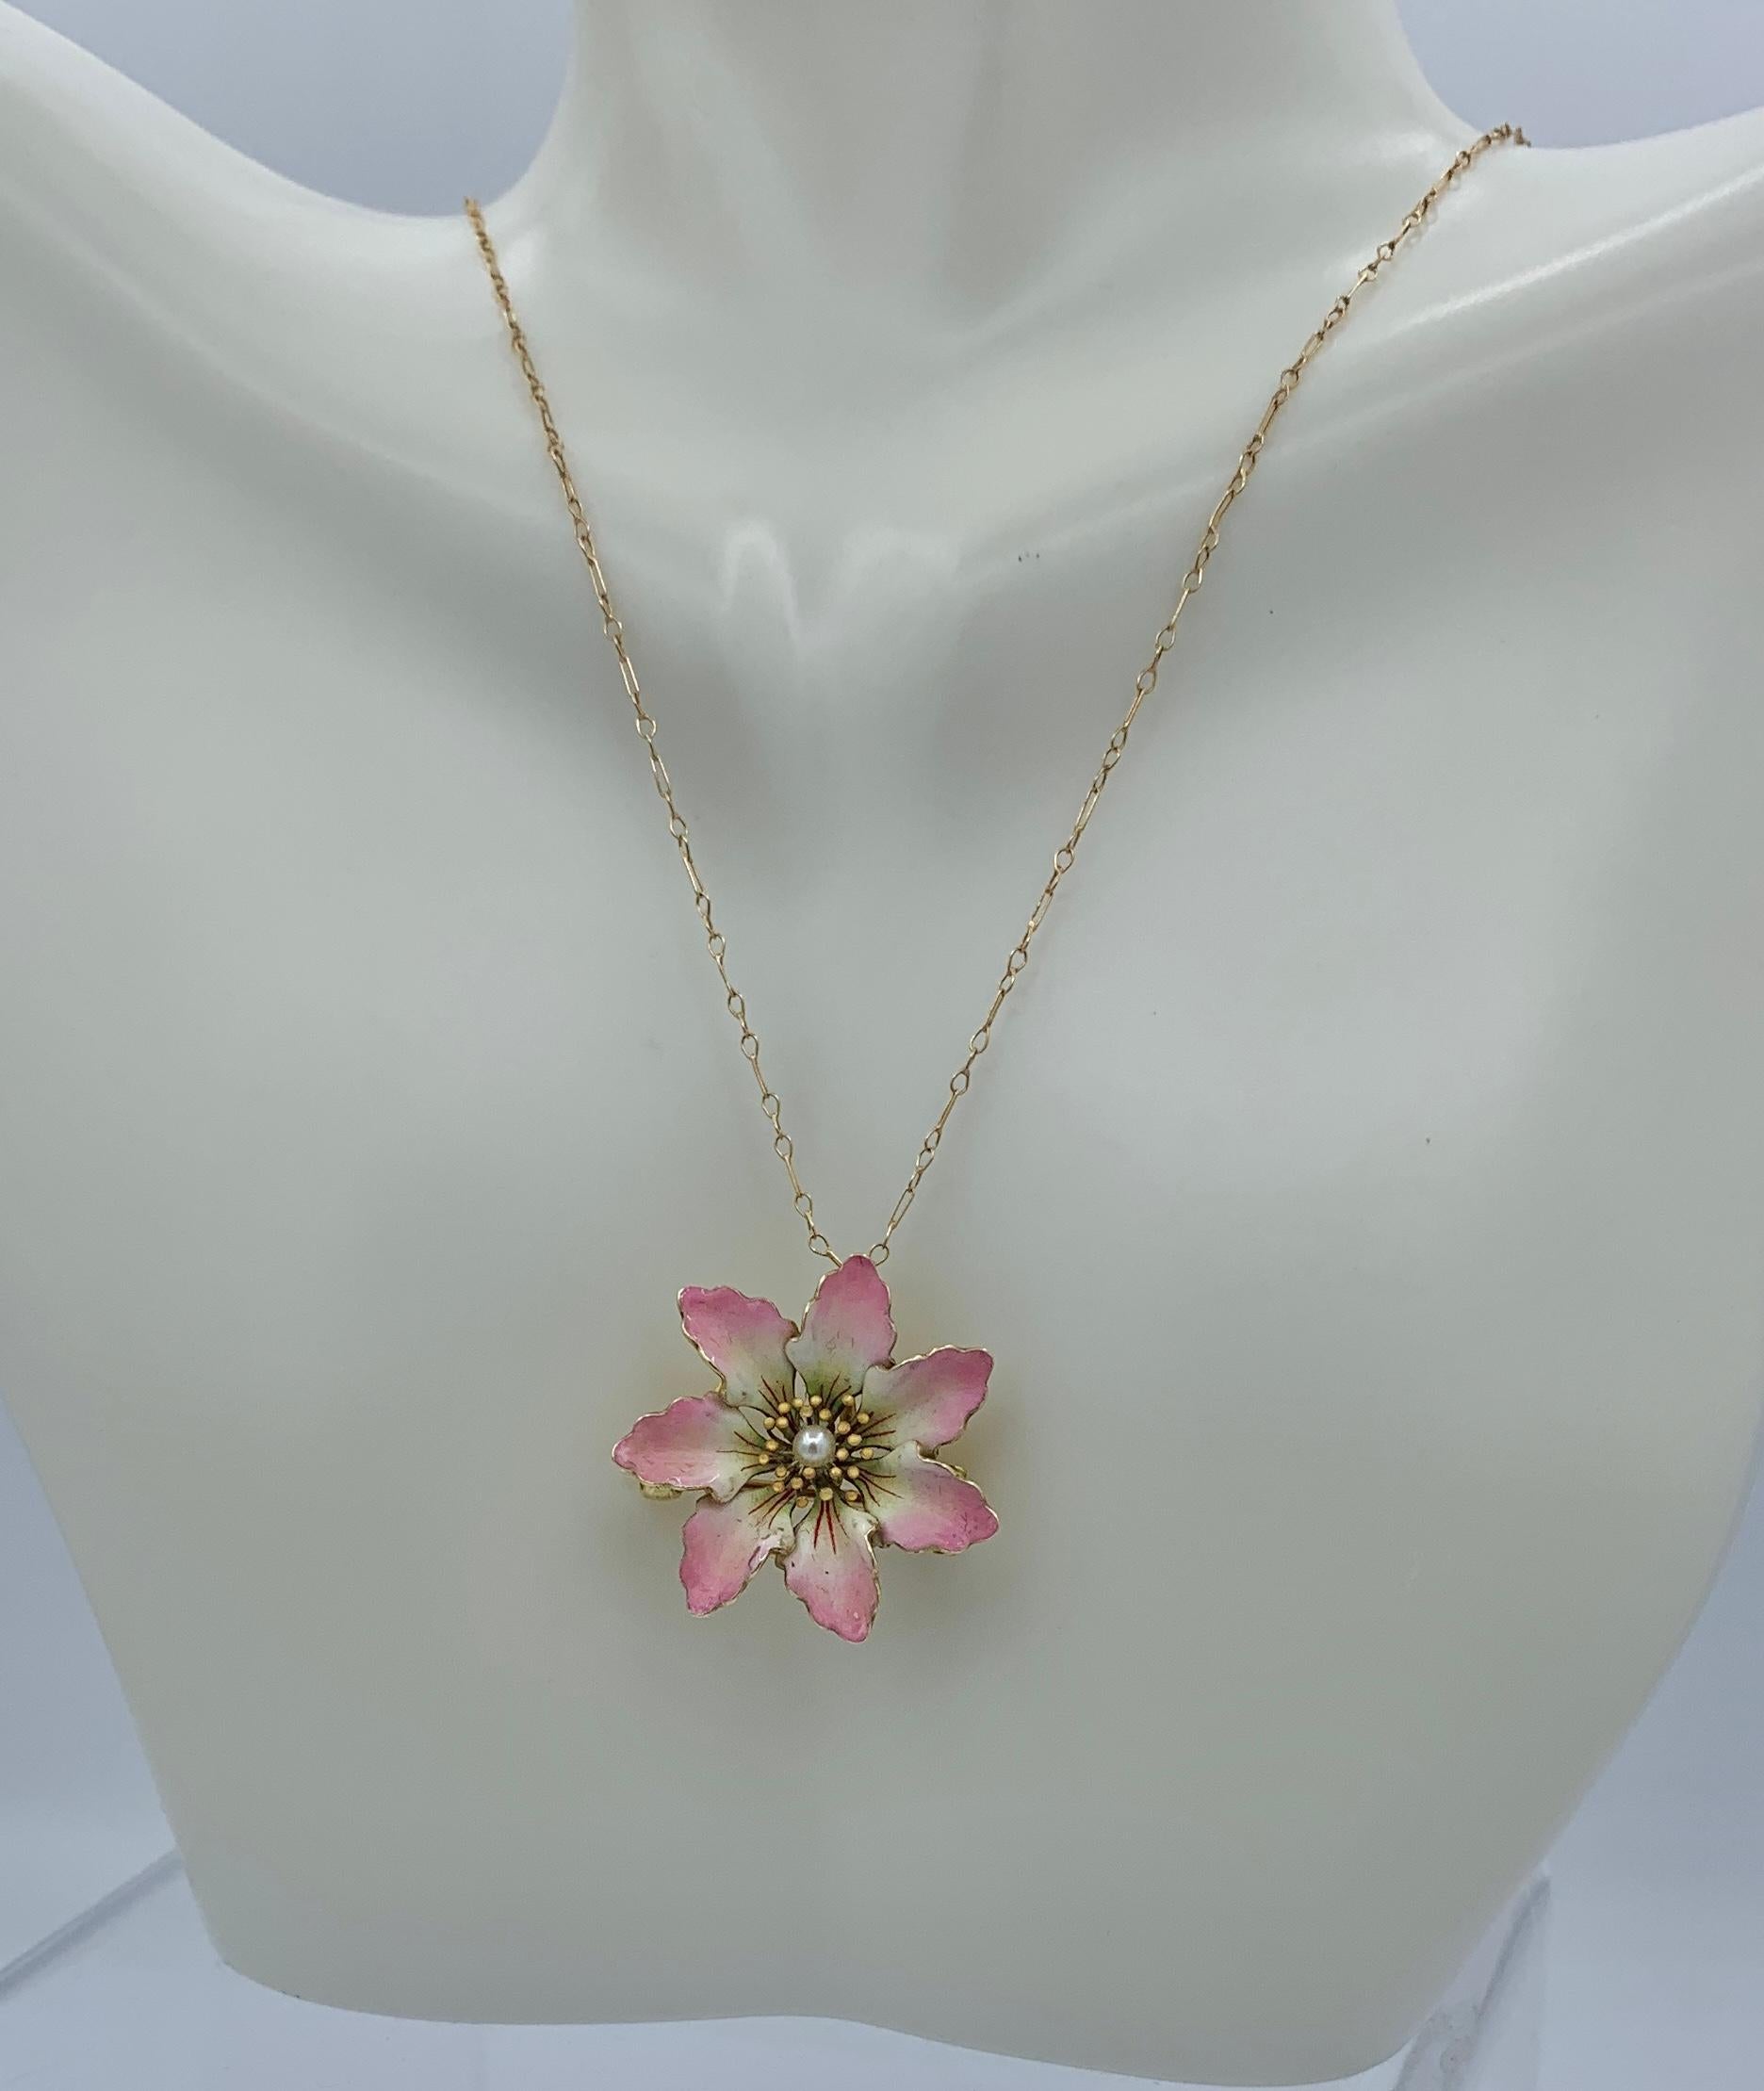 Women's Art Nouveau Pink Enamel Flower Pearl Necklace 14 Karat Gold Pendant Or Brooch For Sale